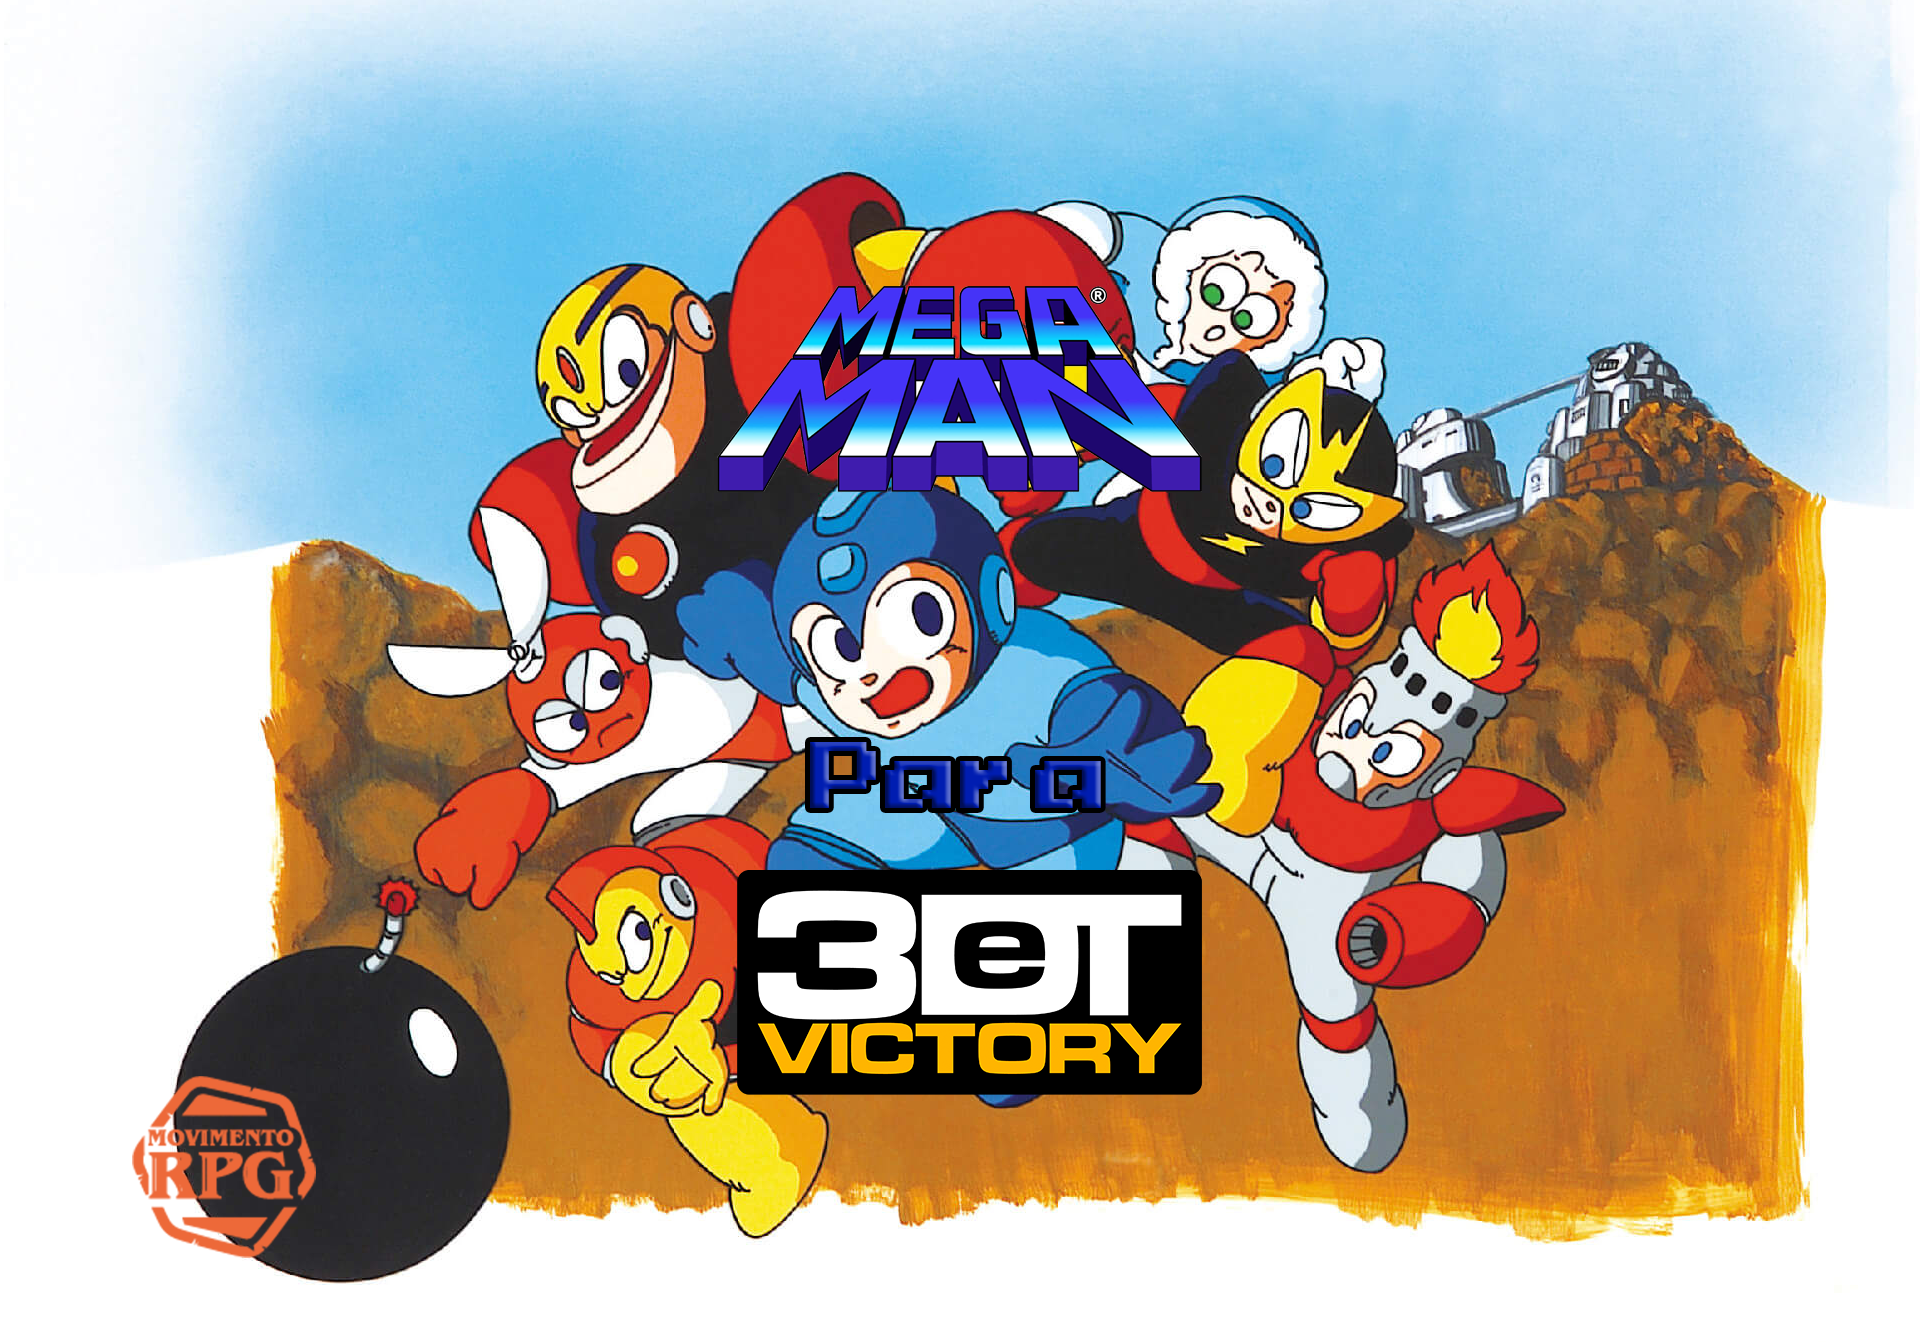 Mega Man 1 para 3DeT Victory